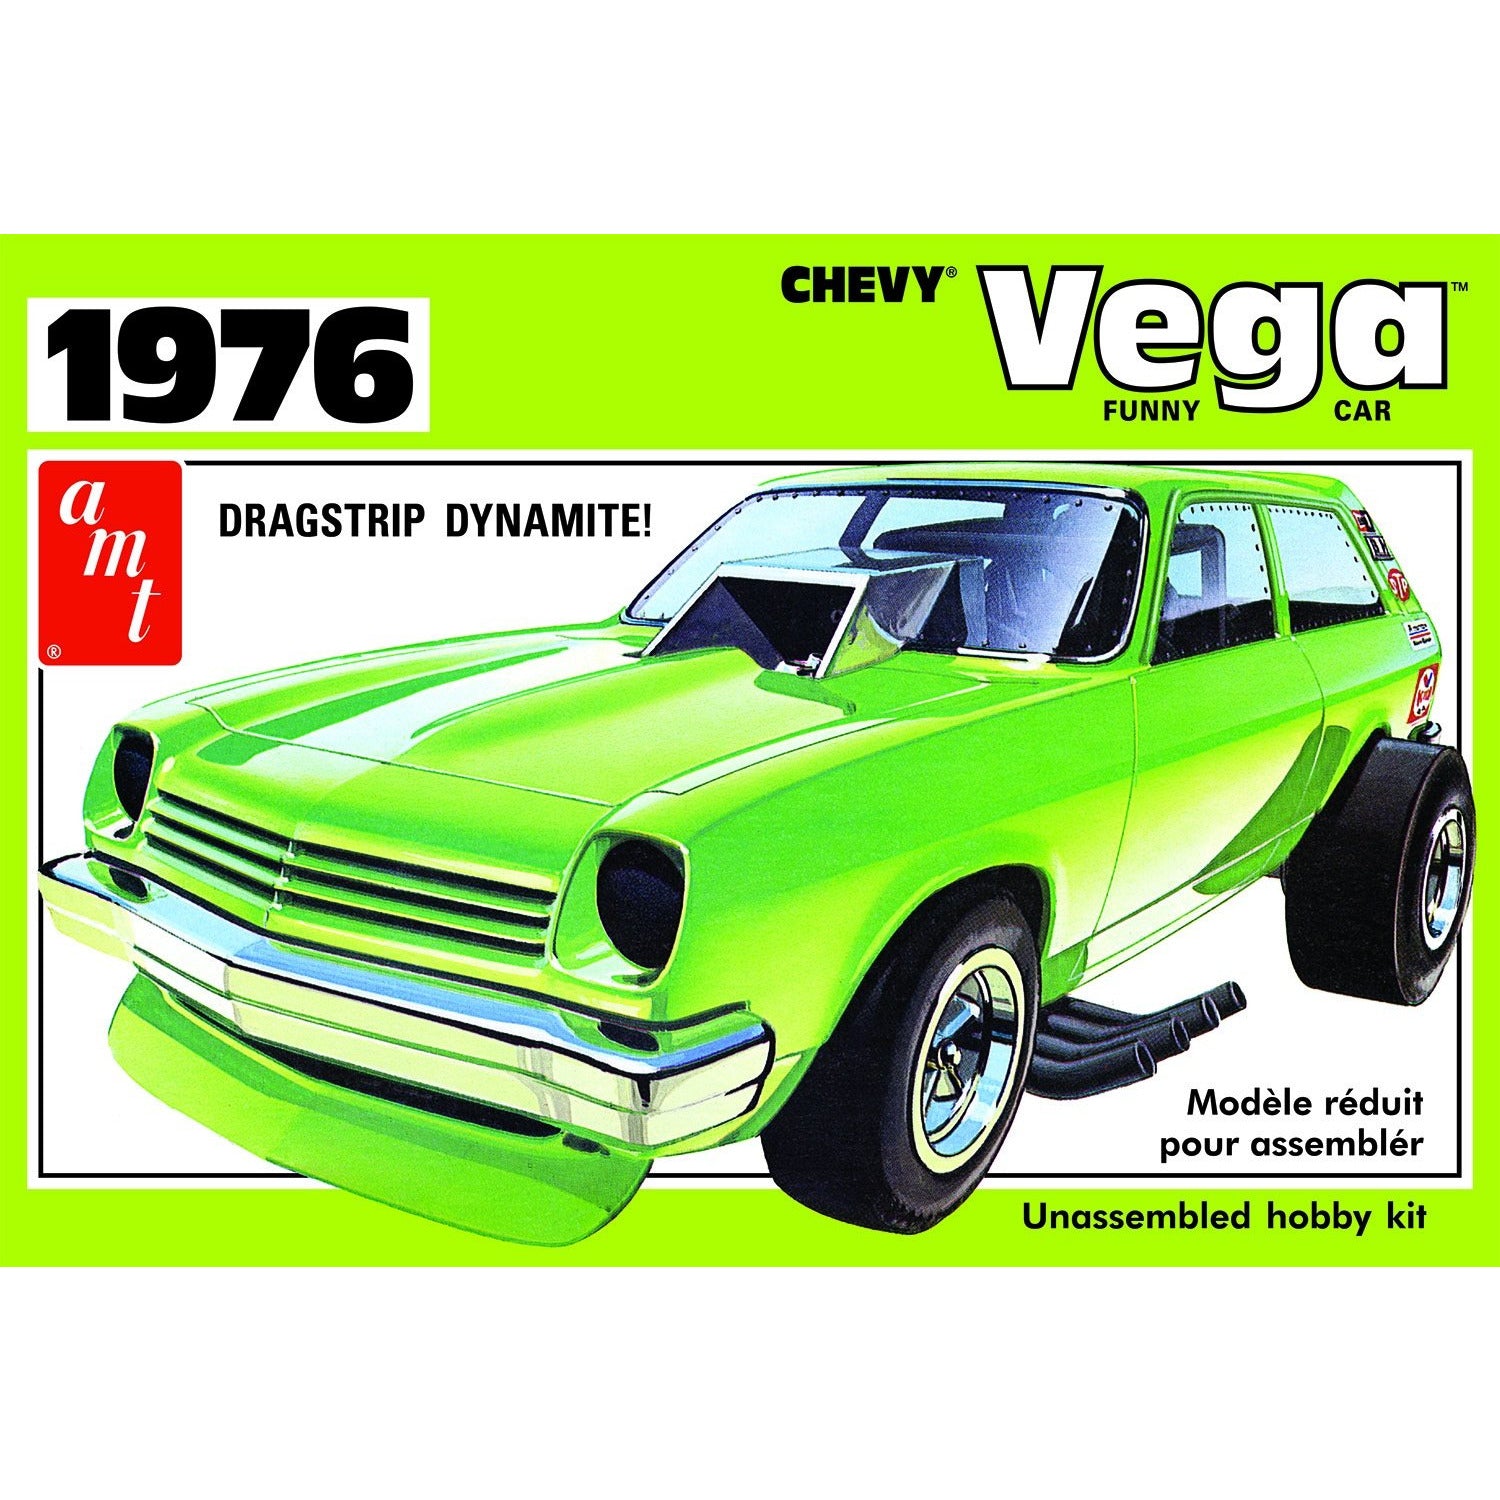 1976 Chevrolet Vega Funny Car 1/25 Model Car Kit #1156 by AMT